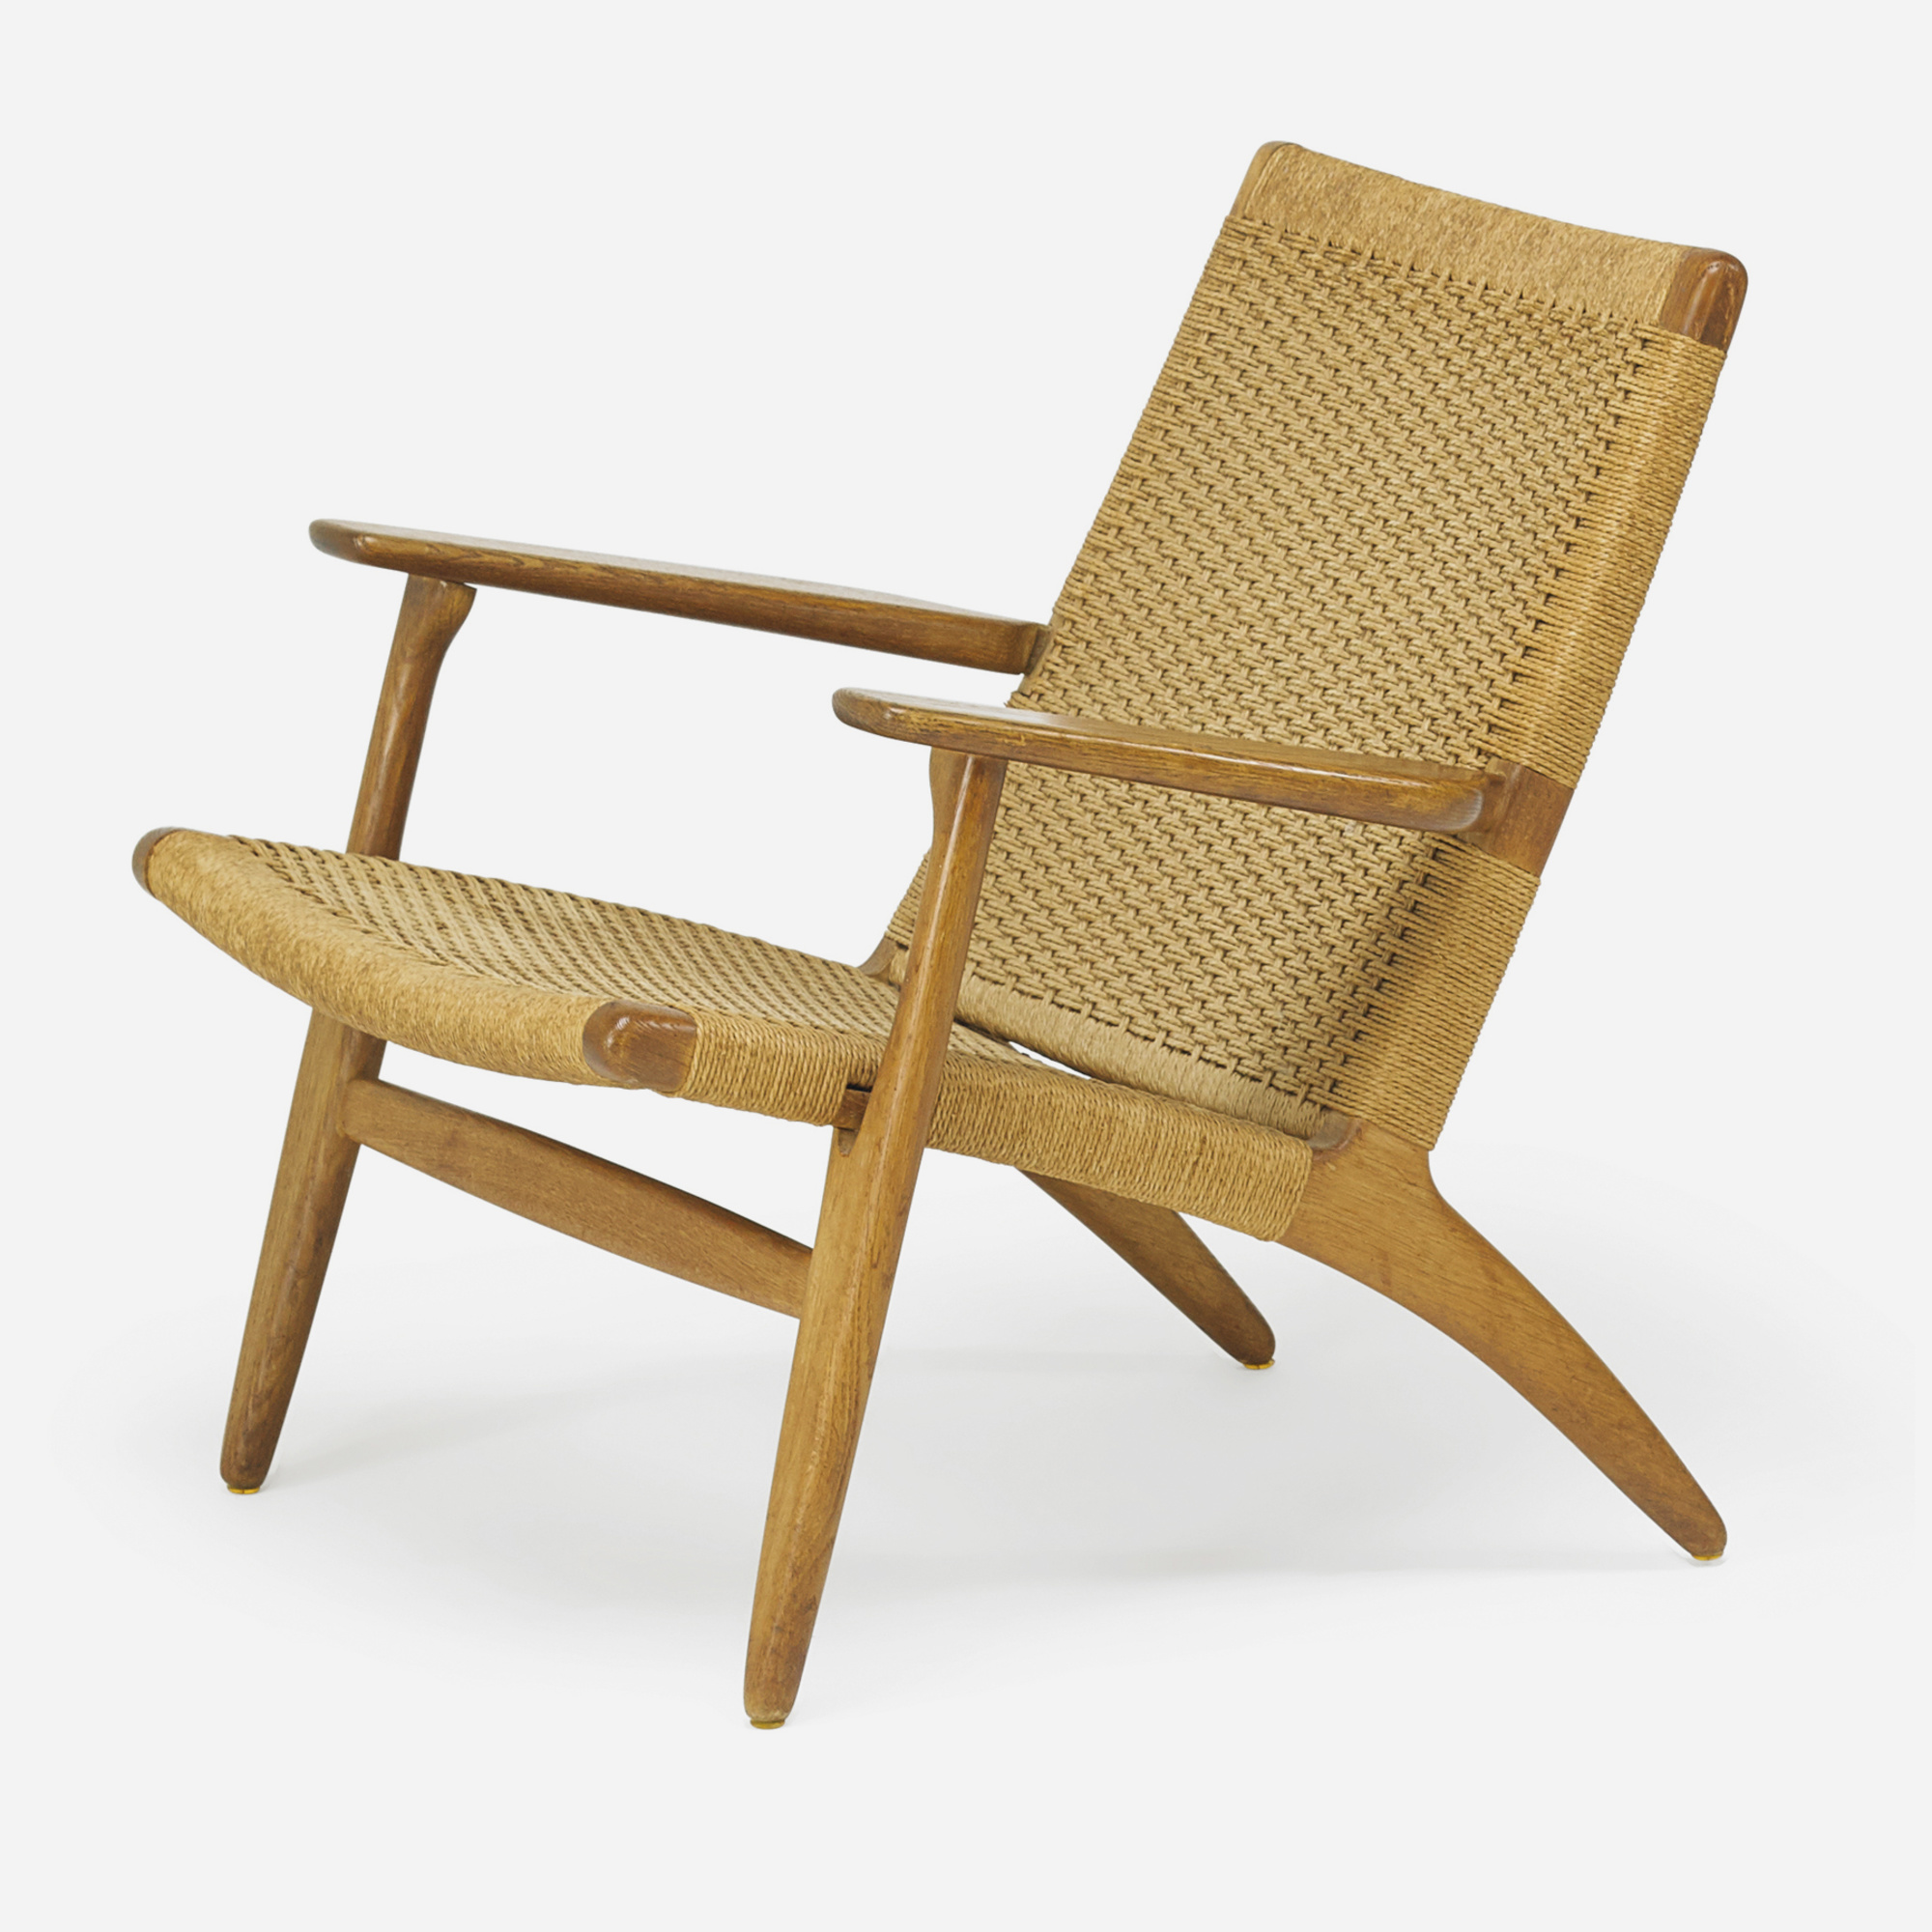 2310: HANS J. WEGNER, Lounge chair < Modern Design, 20 May 2018